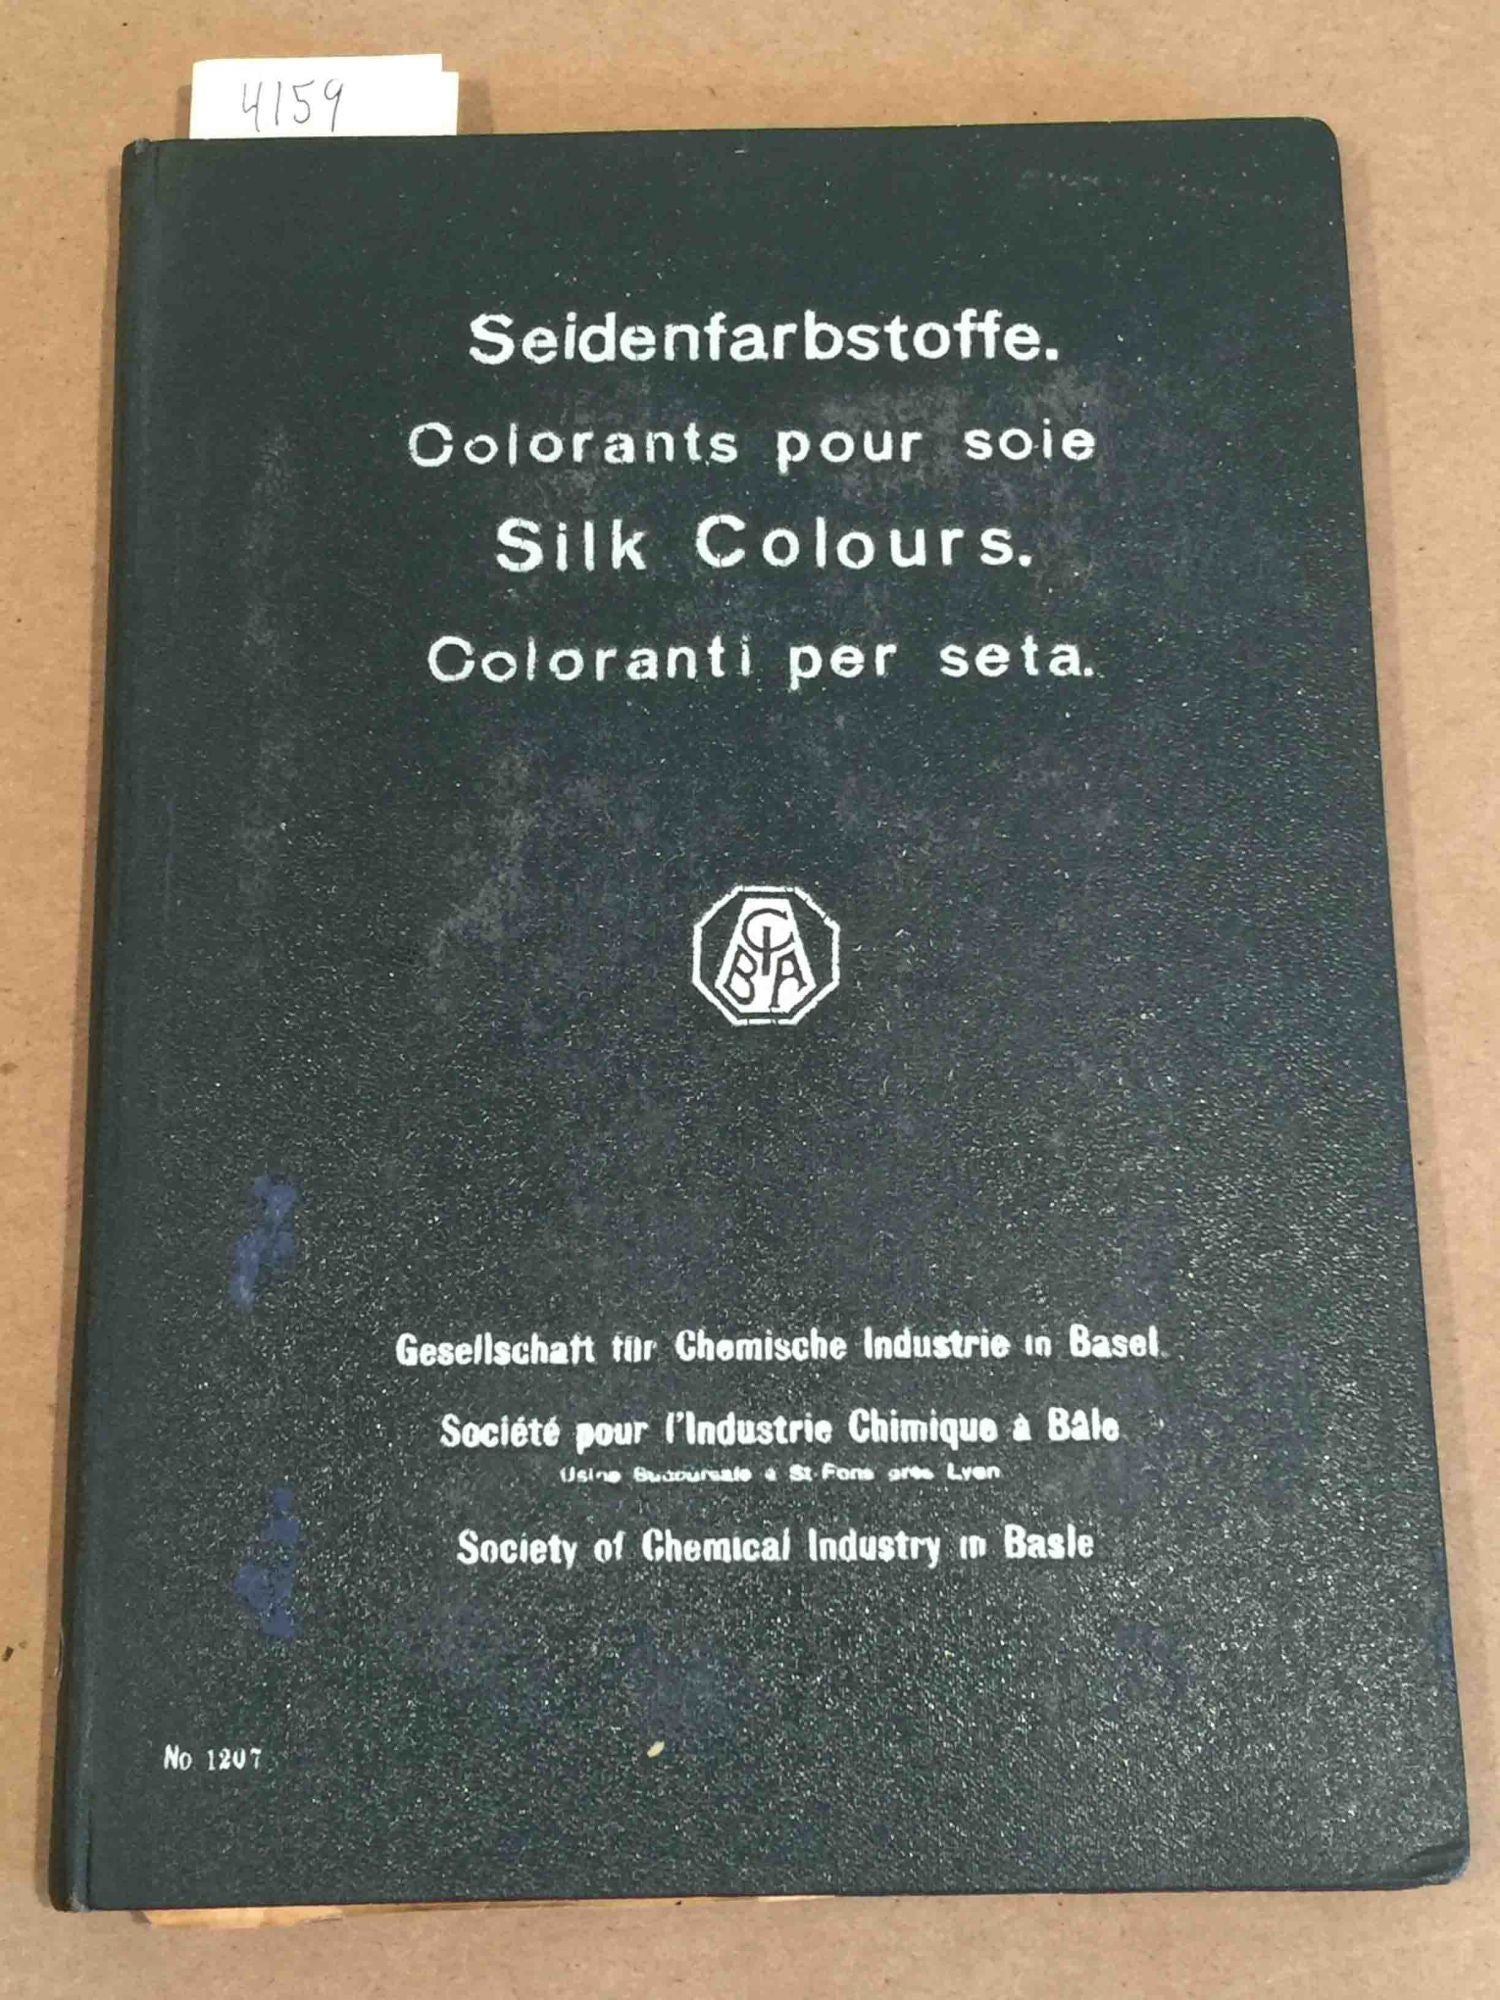 Silk Colours Seidenfarbstoffe, Colorants pour soie No.1207 | Gesellschaft  fur Chemische Industrie in Basle, Society of